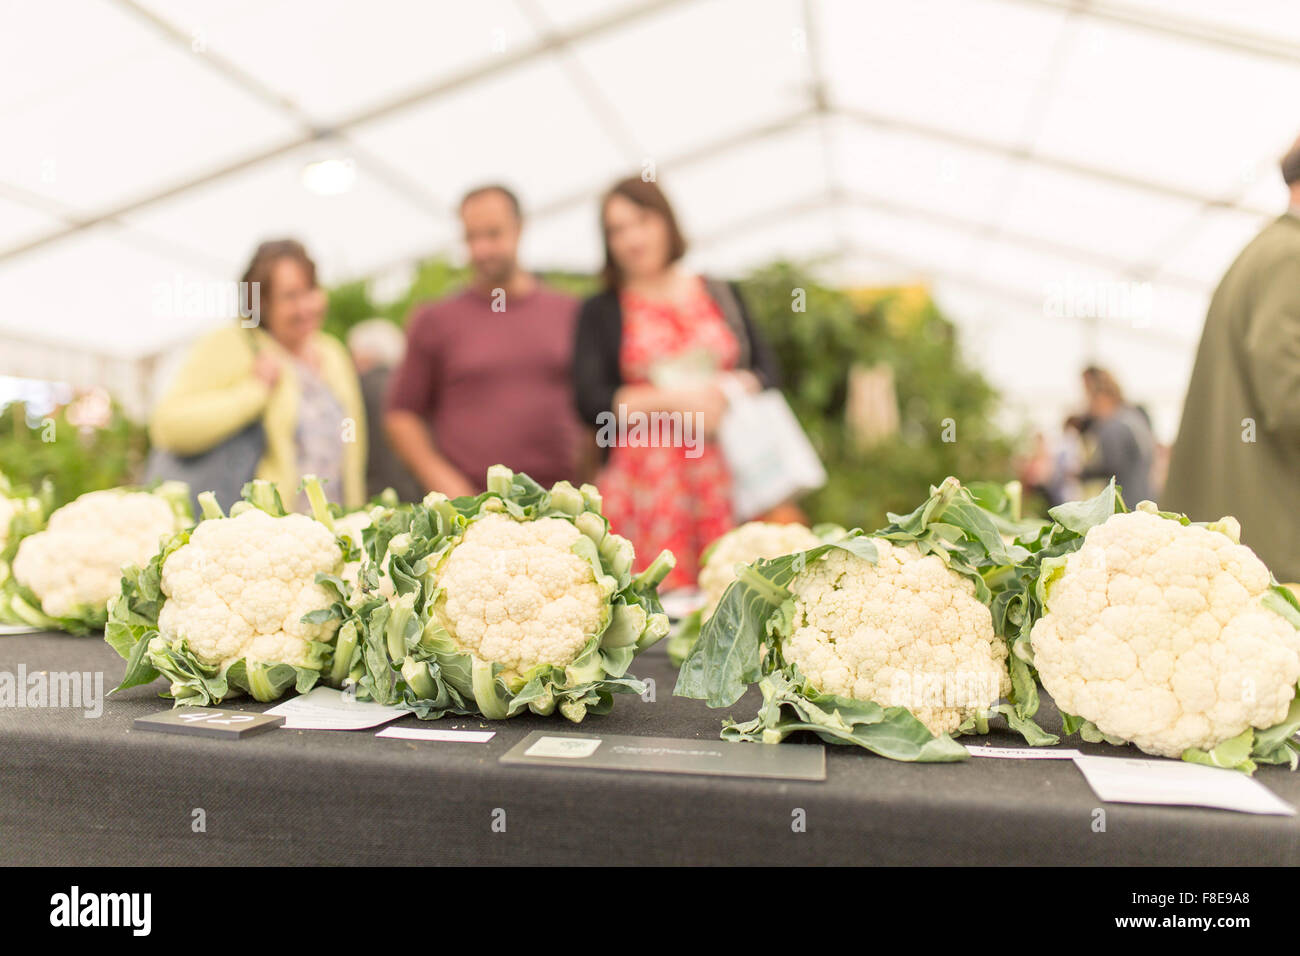 cauliflower judging competition Stock Photo